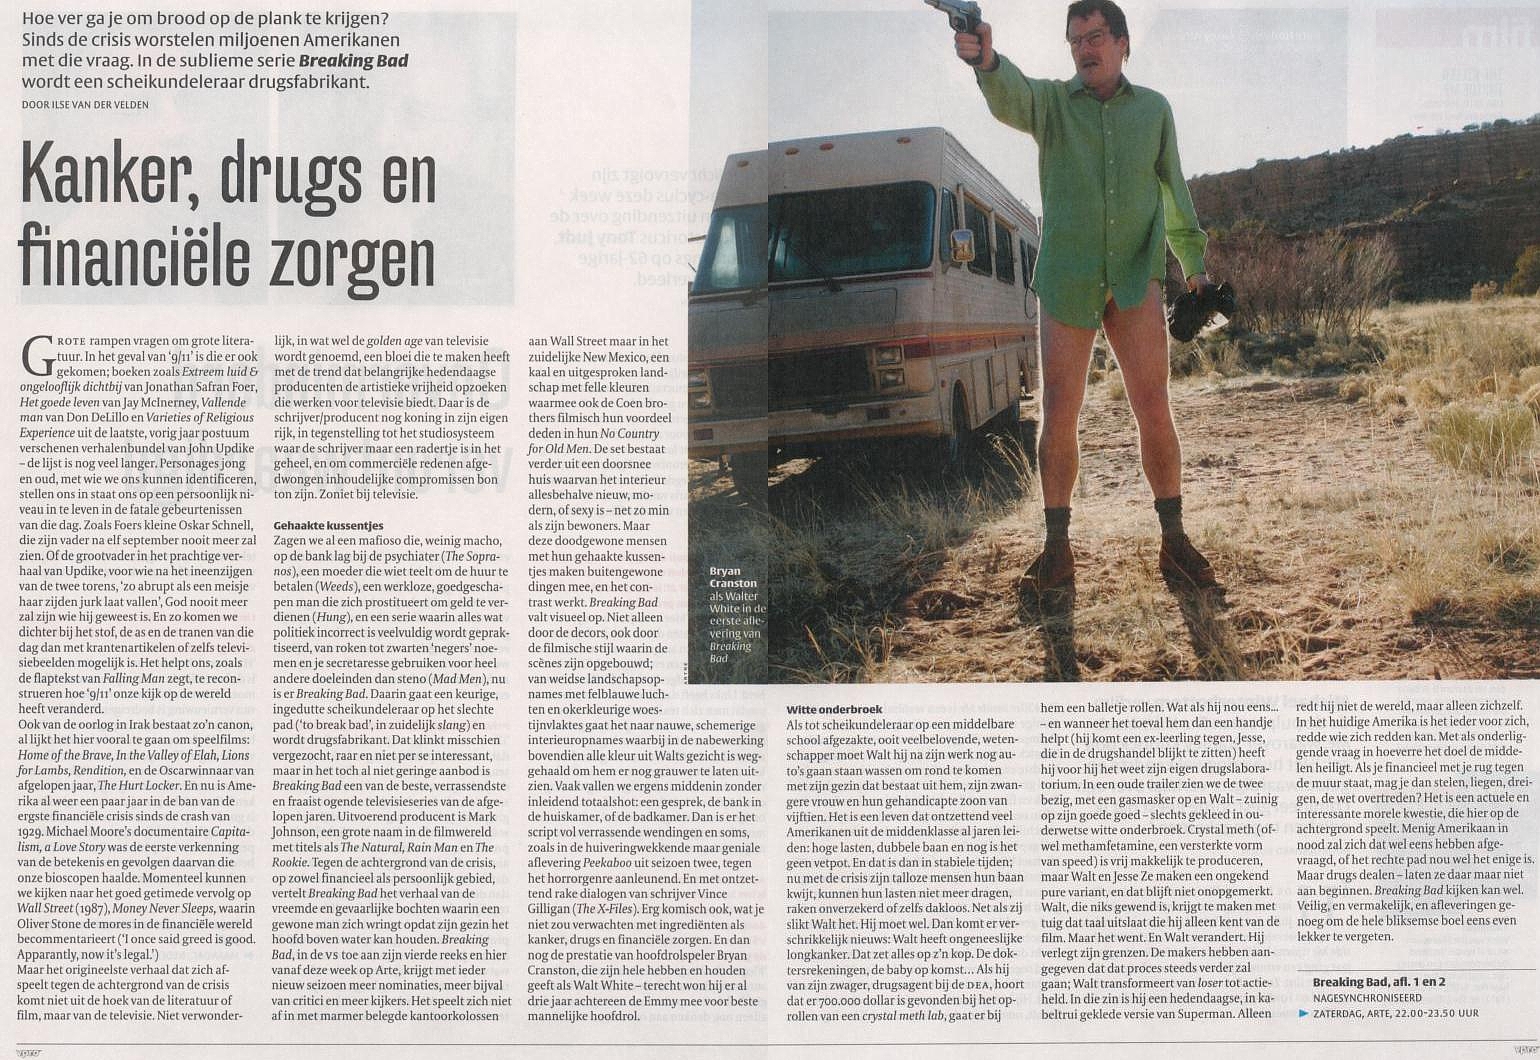 Dutch VPRO Gids TV magazine, October 9, 2010